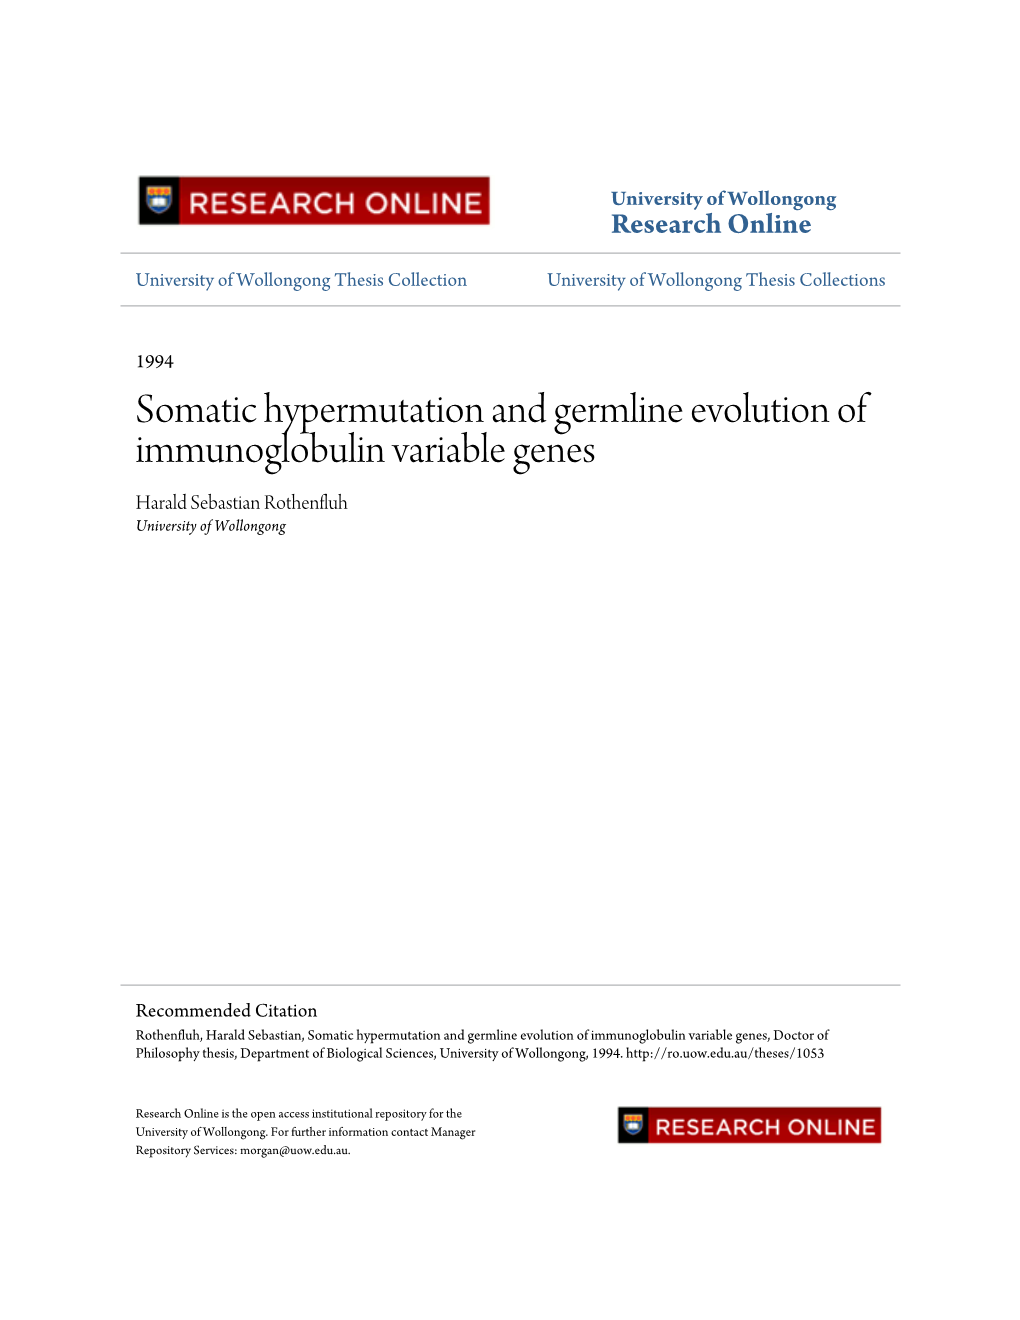 Somatic Hypermutation and Germline Evolution of Immunoglobulin Variable Genes Harald Sebastian Rothenfluh University of Wollongong